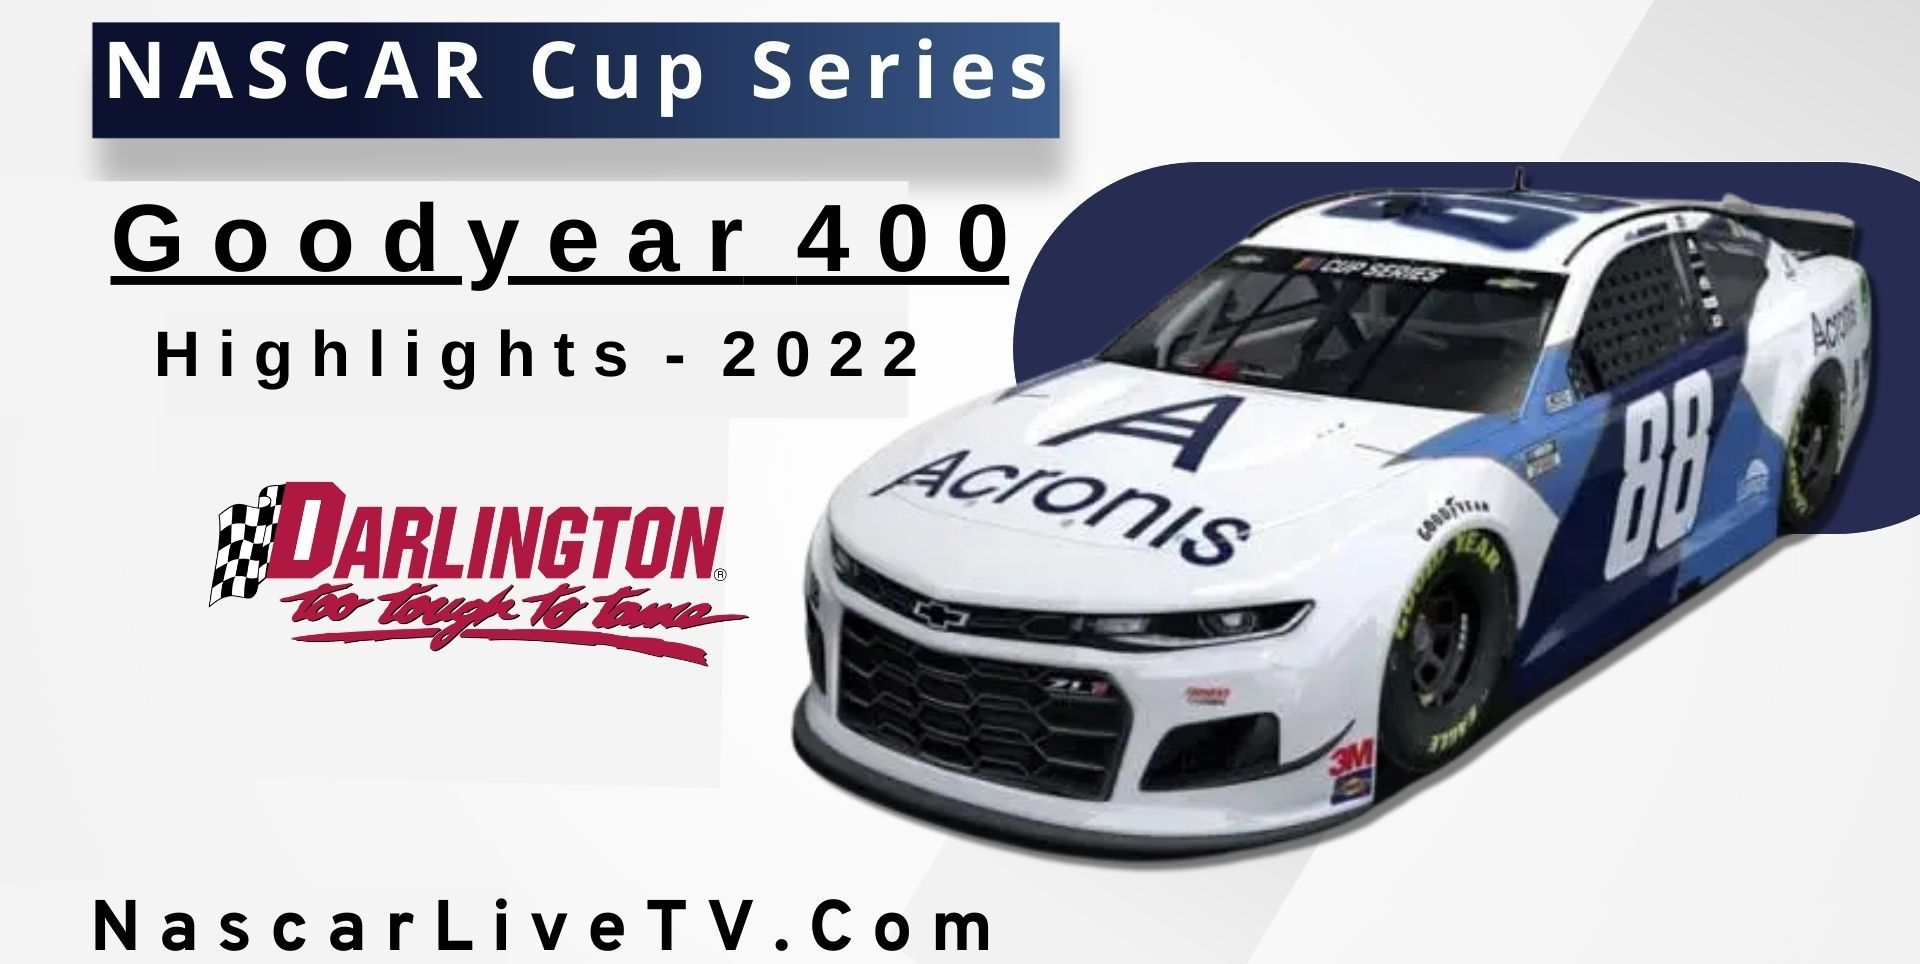 Goodyear 400 Highlights NASCAR Cup Series 2022